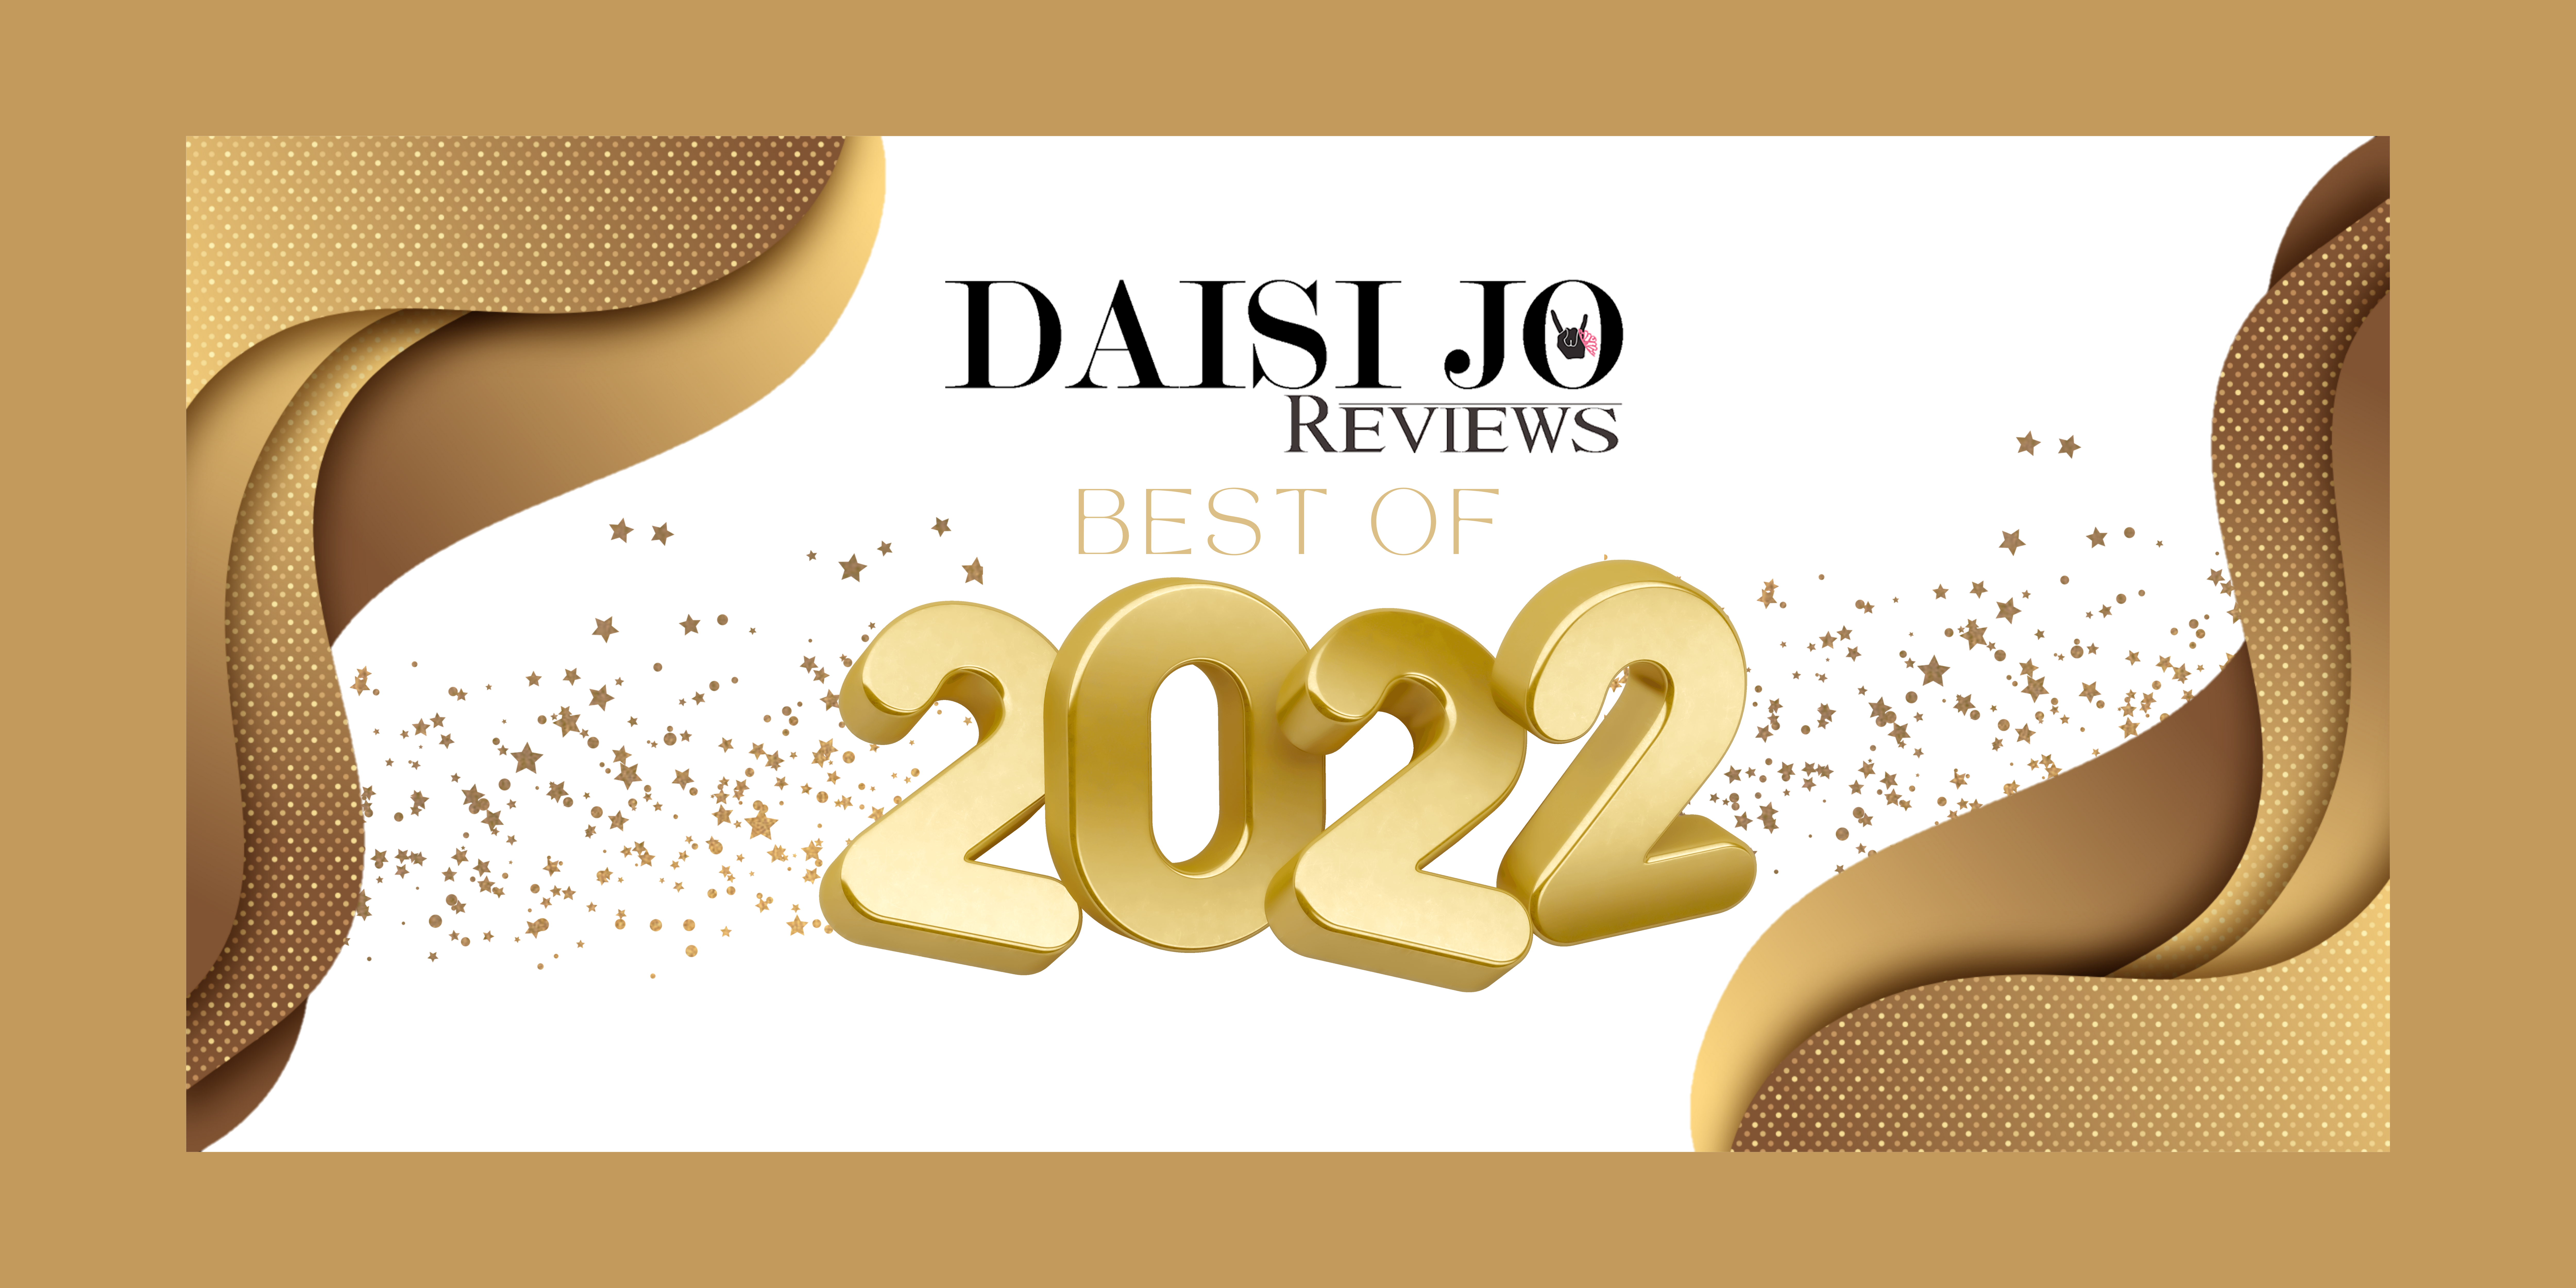 Daisi Jo Reviews Best of 2022 List